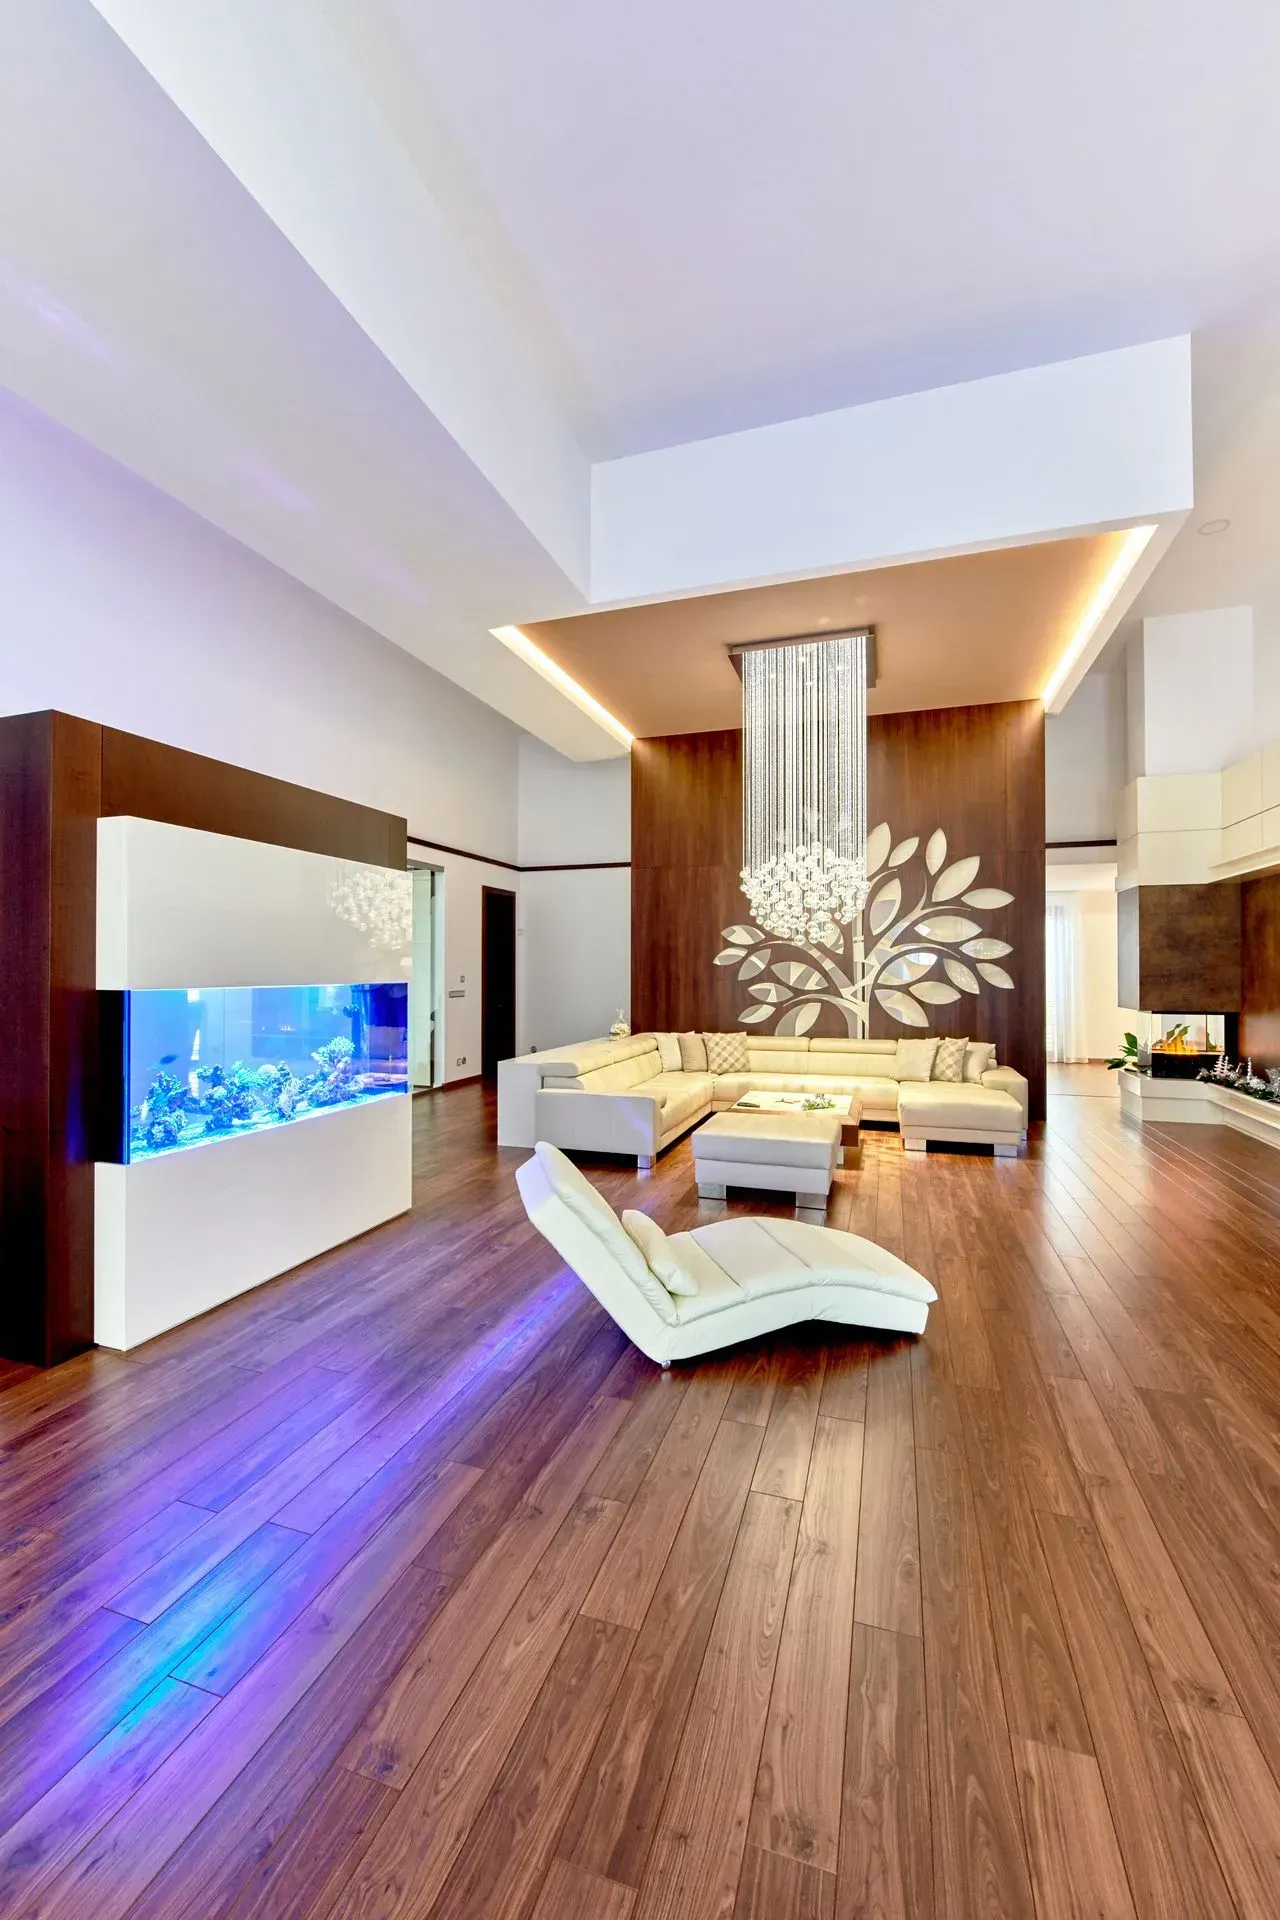 Livingroom modern chandelier in tall interior